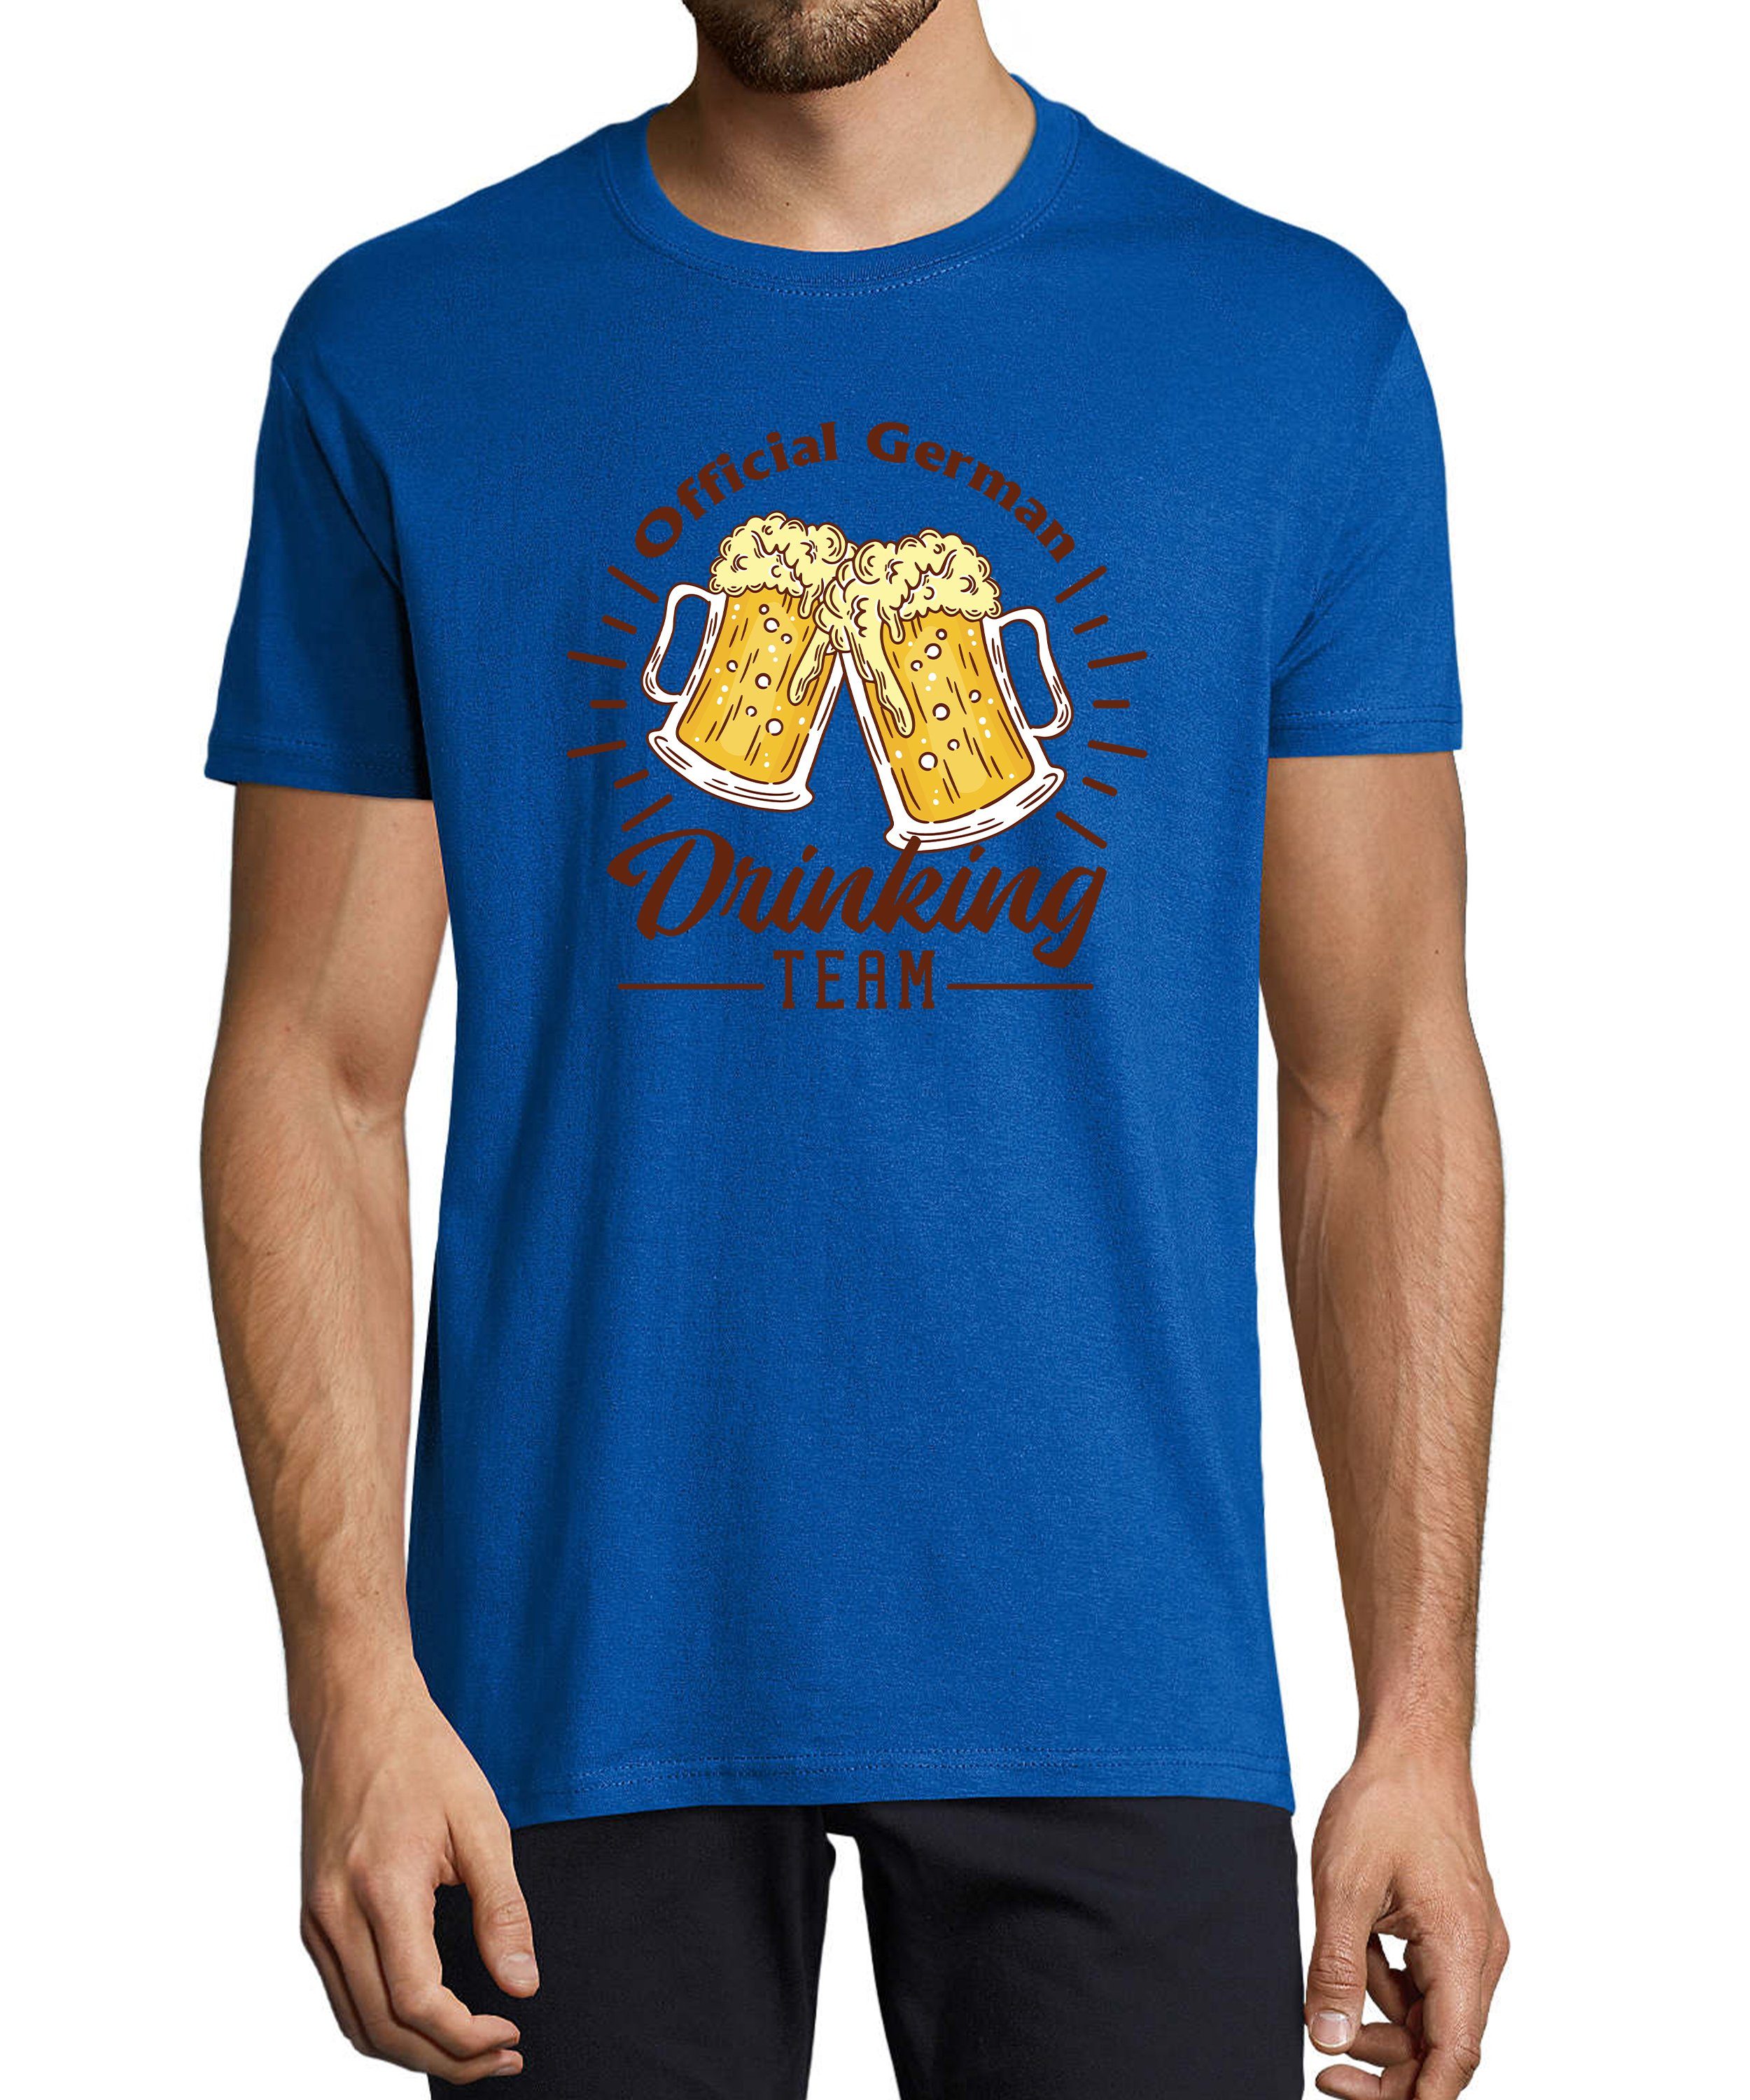 MyDesign24 T-Shirt Herren Fun Print Shirt - Oktoberfest official Drinking Team Baumwollshirt mit Aufdruck Regular Fit, i304 royal blau